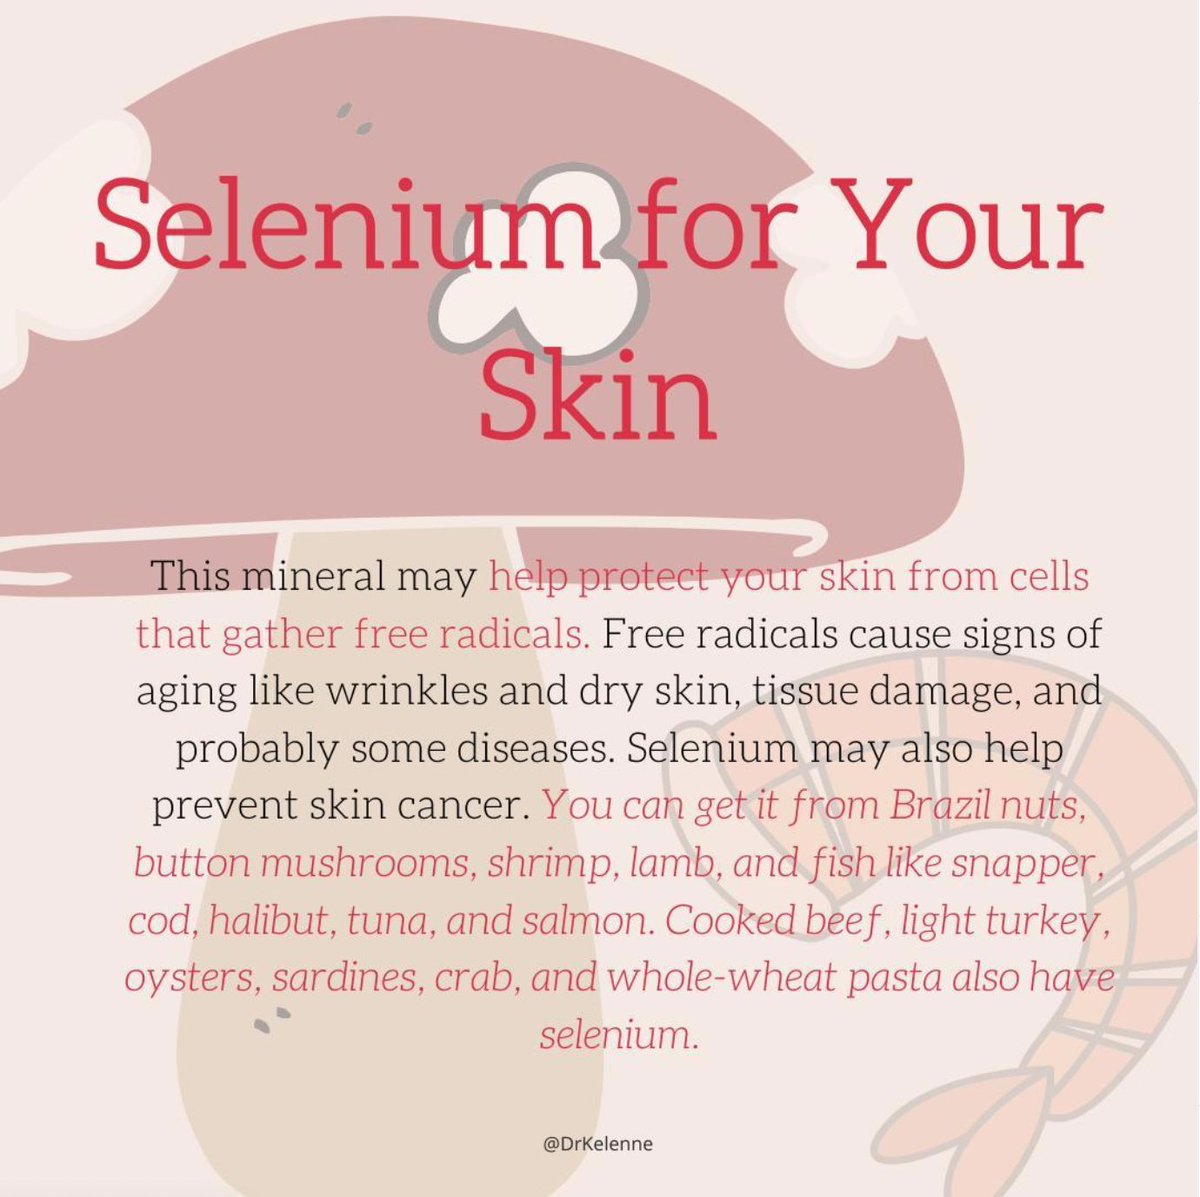 Our skin needs enough minerals . Eat foods rich in selenium.
#healthcaretips #familymedicine #caribbean #blackdoctor #telemedicine #telehealth #yourcaribbeandoctor #skincare #selenium 🇹🇹🇻🇨🇵🇷🇦🇬🇧🇸🇧🇧🇧🇷🇨🇦🇫🇰🇬🇩🇬🇾🇯🇲🇭🇹🇱🇨🇰🇳